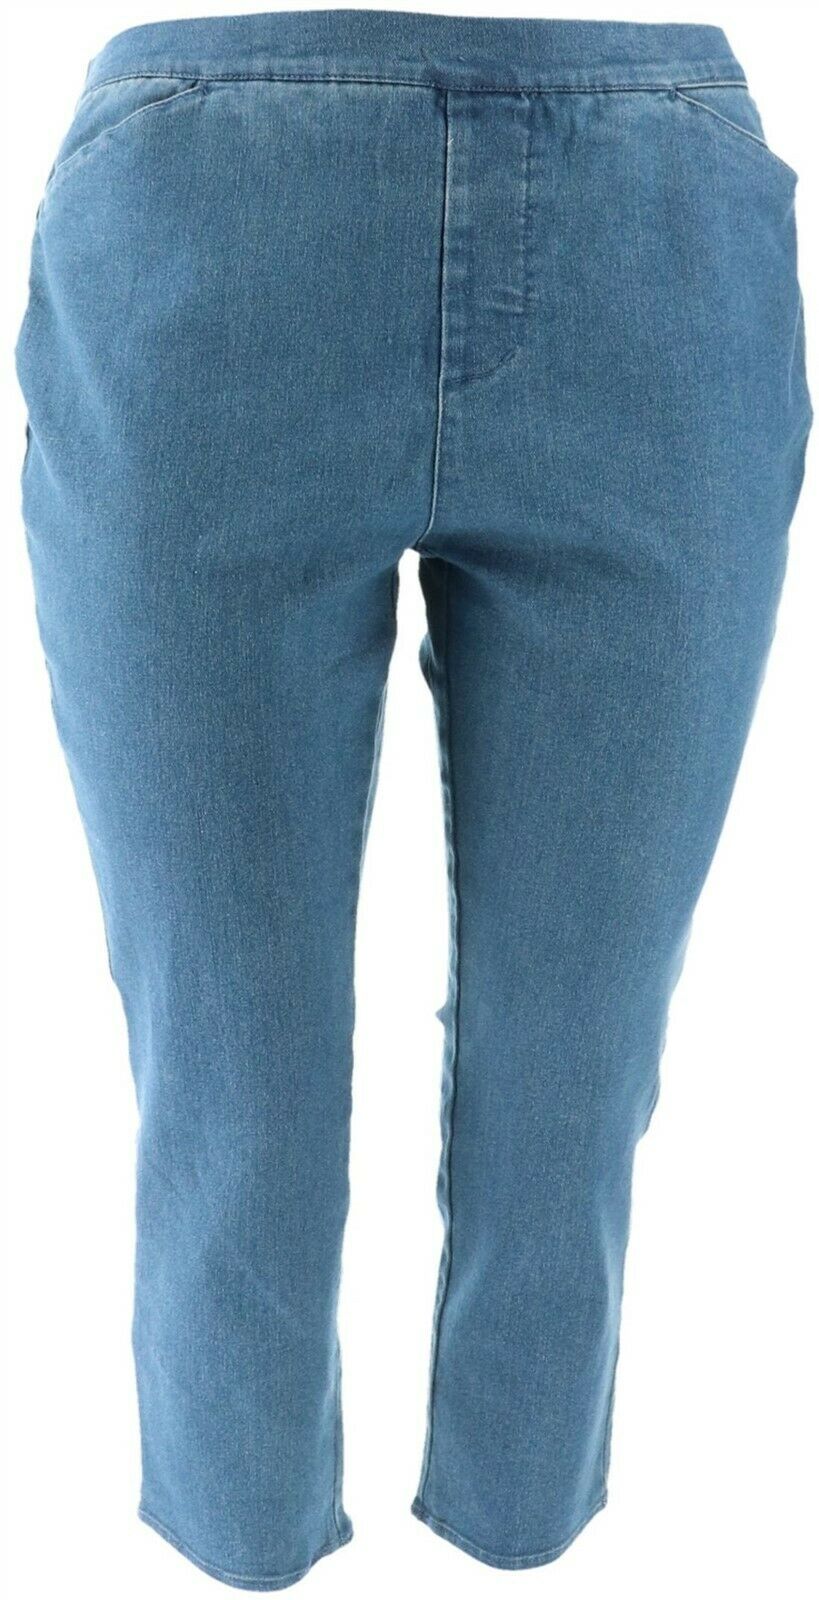 liz claiborne classic jeans